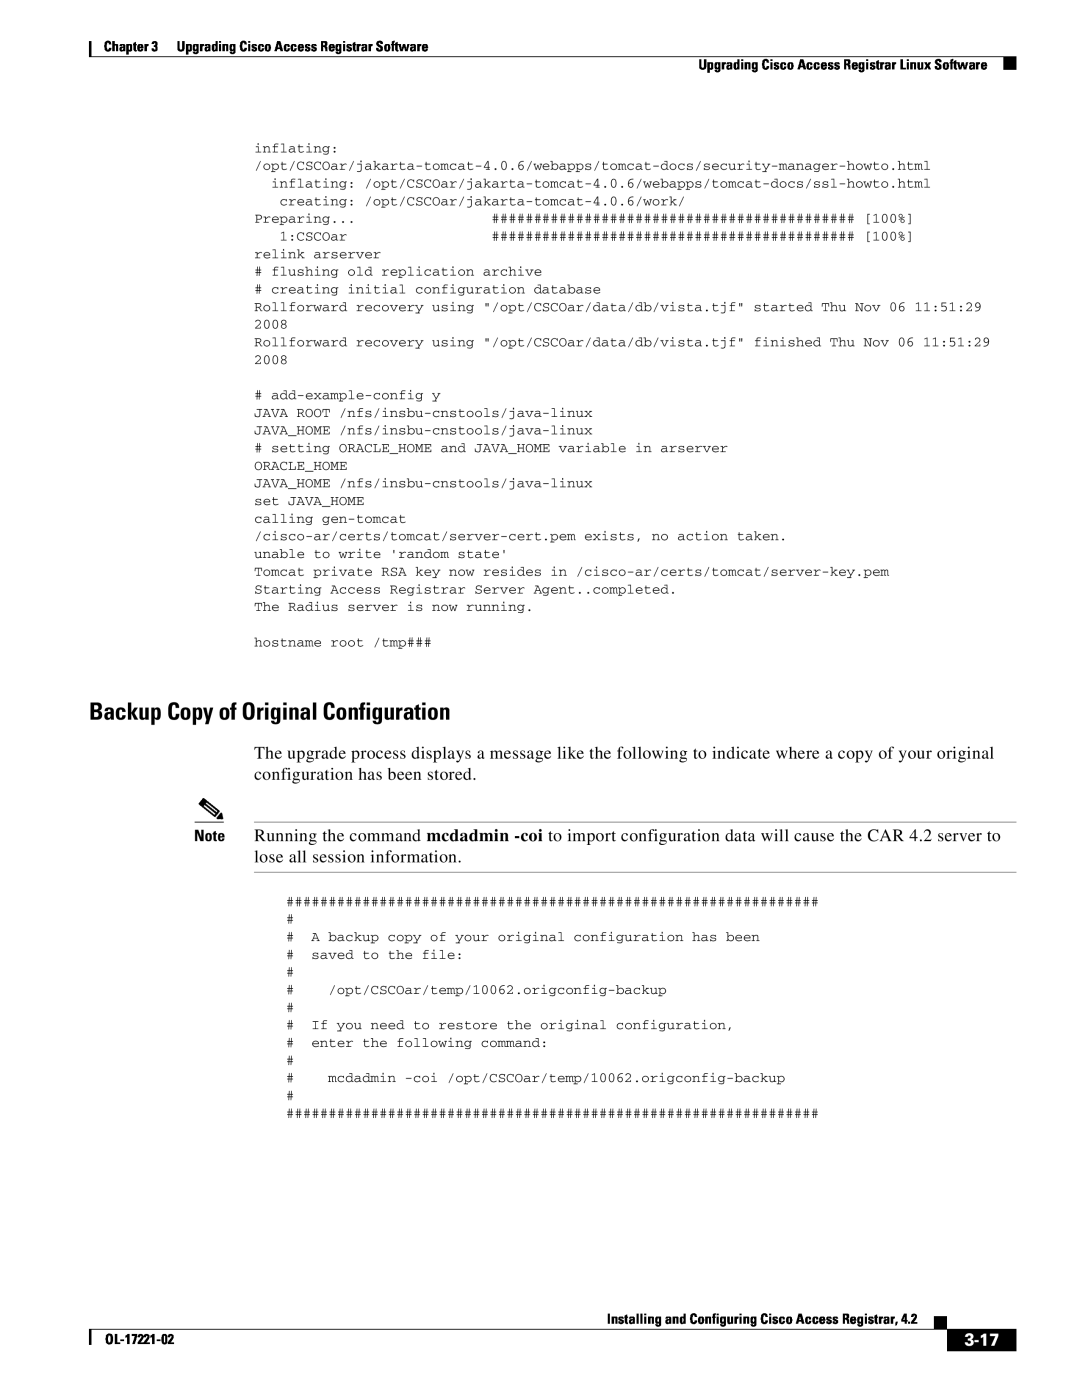 Cisco Systems 4.2 manual Backup Copy of Original Configuration, 3-17, Preparing 